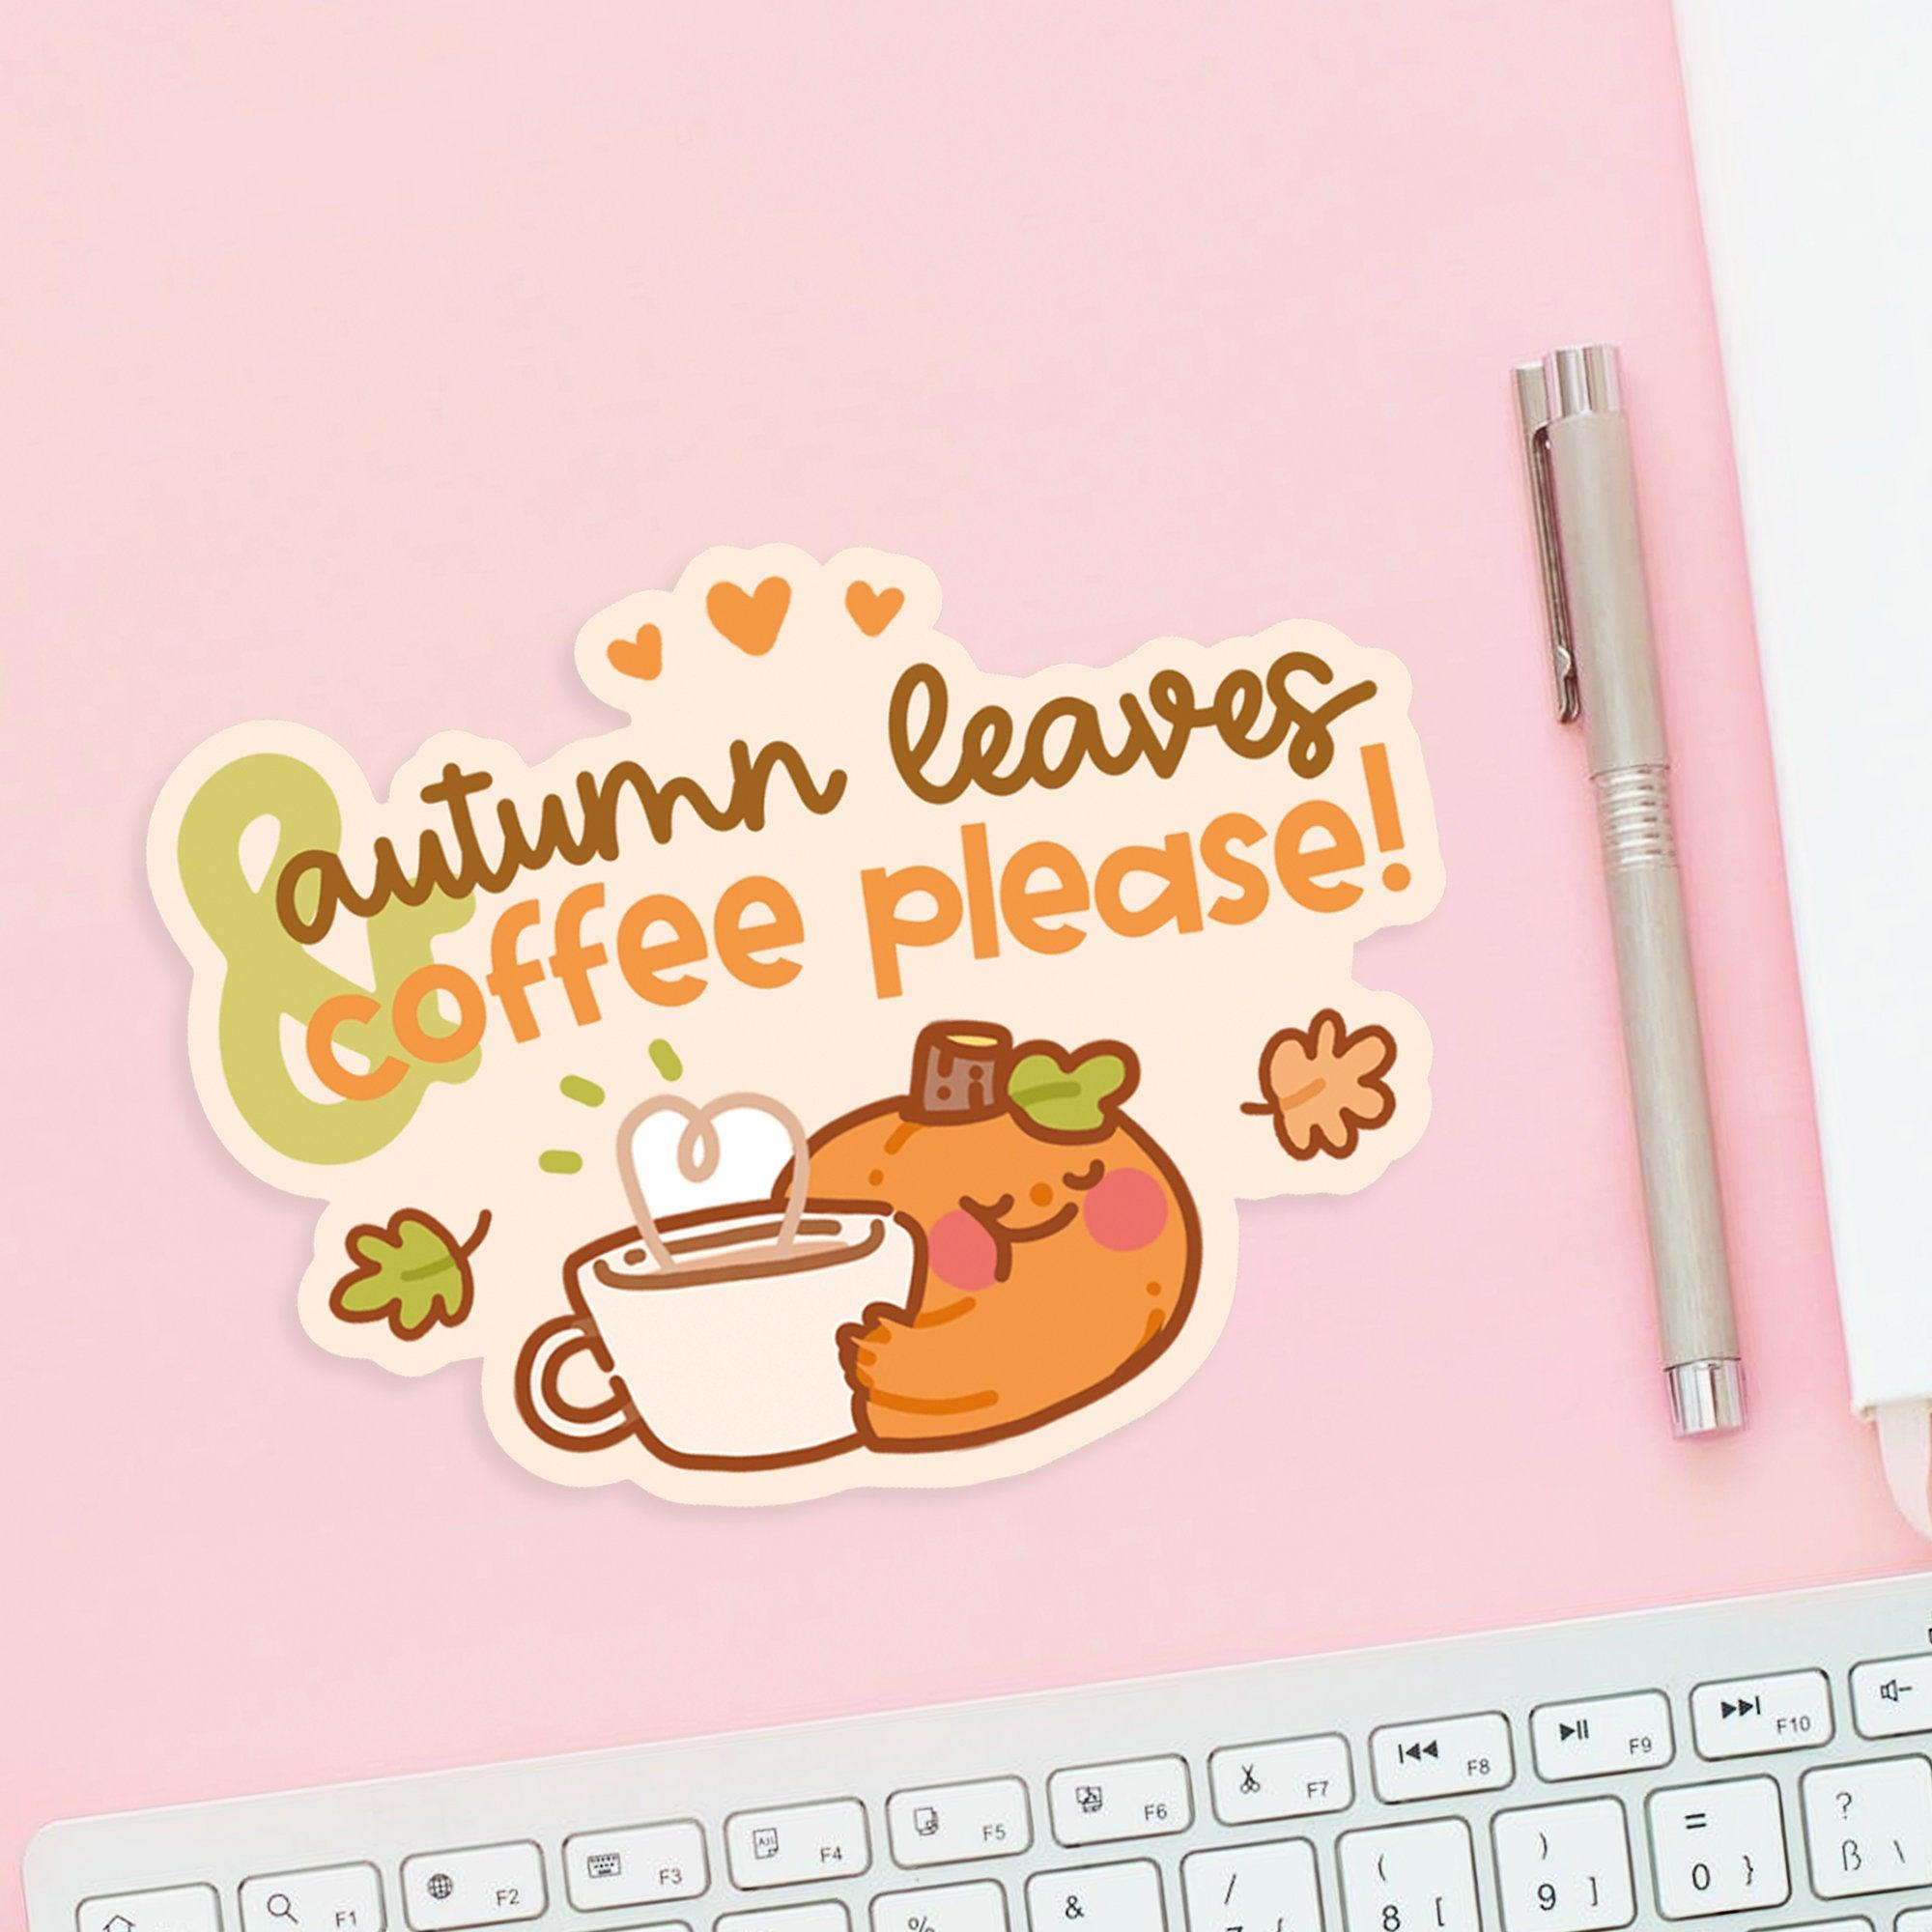 Autumn Leaves & Coffee Please waterproof vinyl sticker featuring Katnipp character and illustration, main